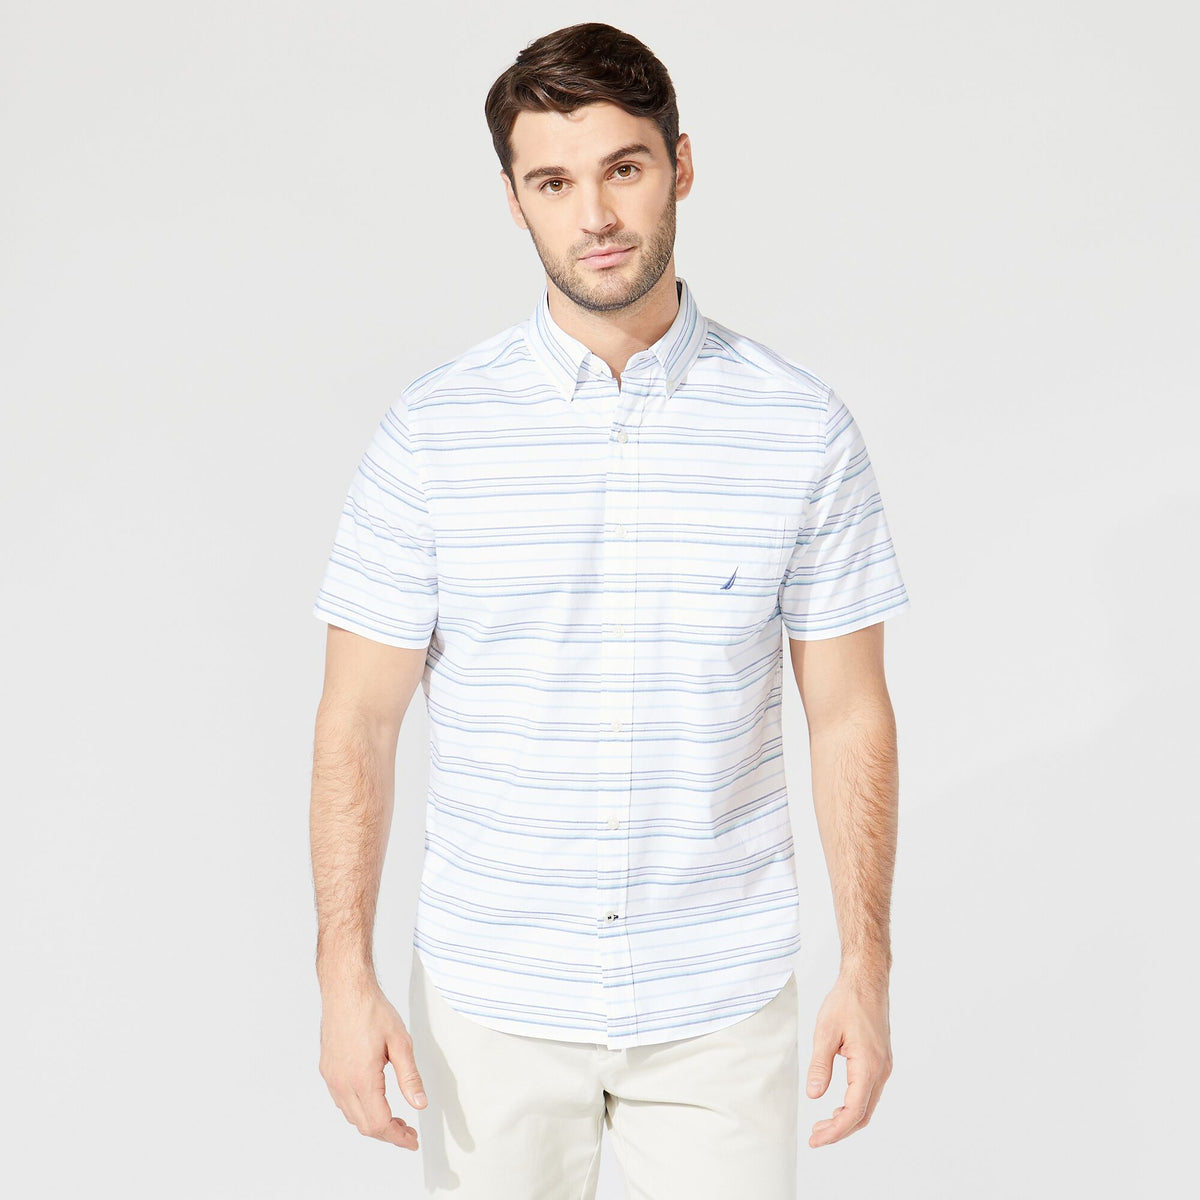 Nautica Men's Big & Tall Striped Short Sleeve Shirt Bright White